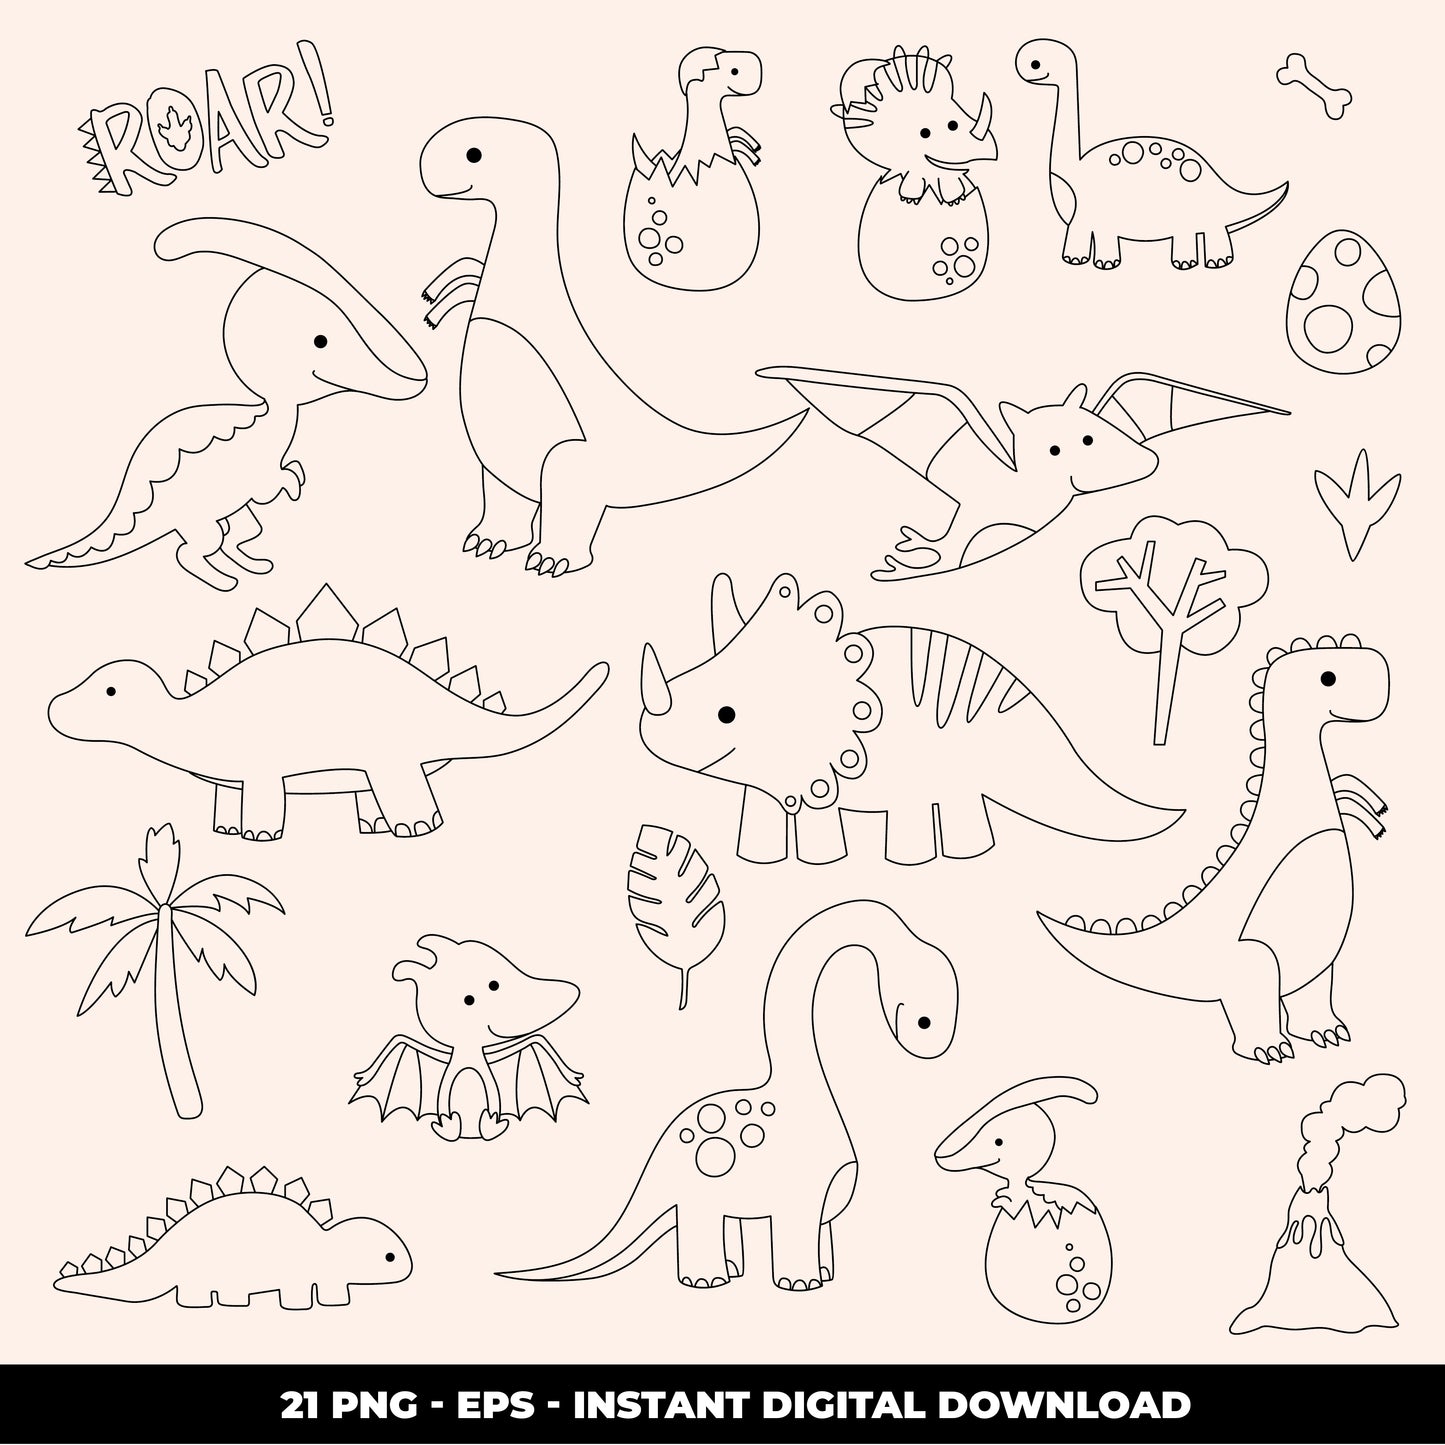 COD804 - Dinosaur clipart, kids dinosaur clipart, t-rex clipart, dino clipart, triceratops clipart files